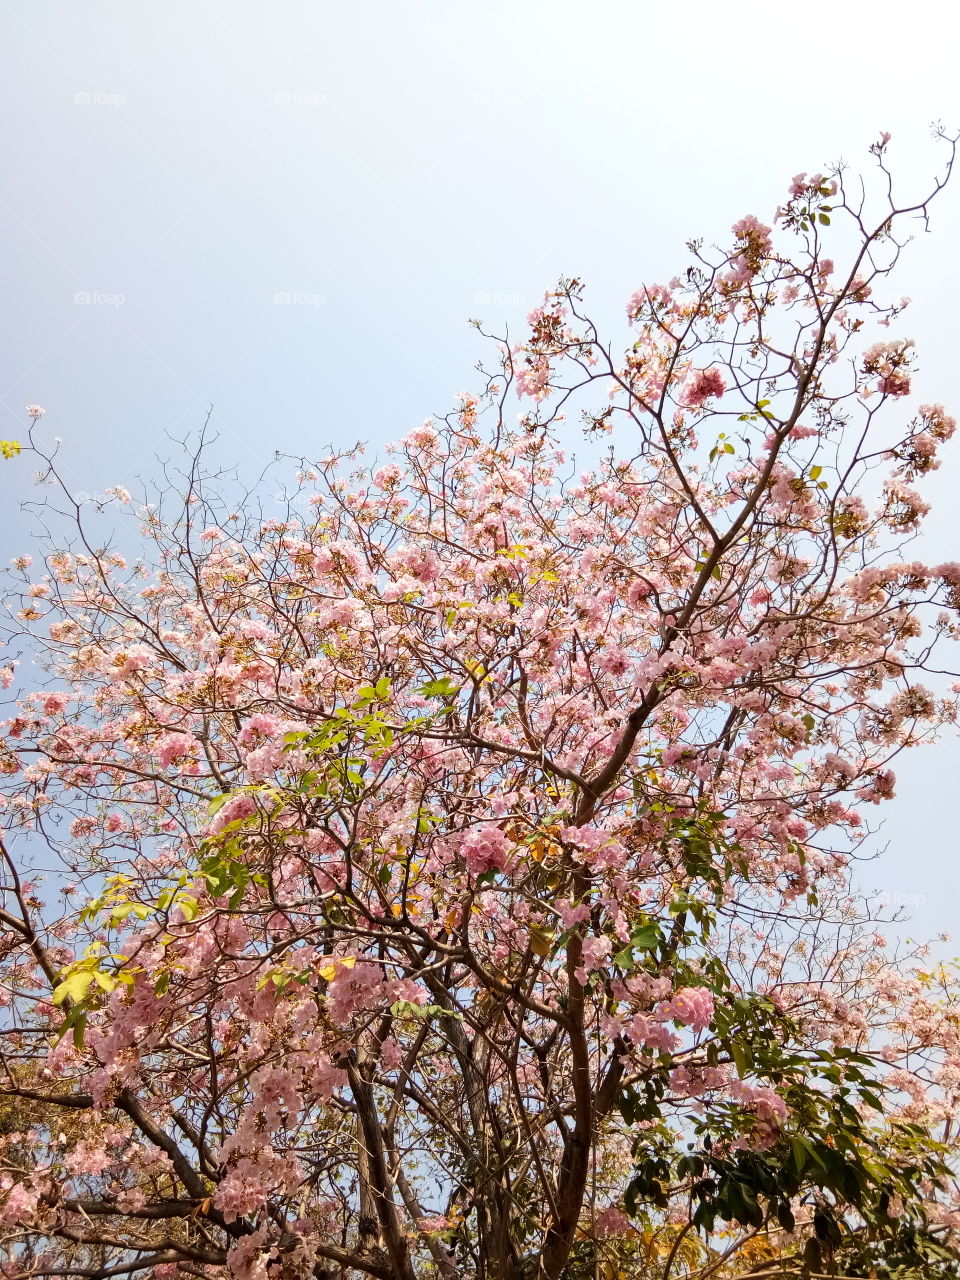 chompoo panthip
chompoo flower
flower
tree